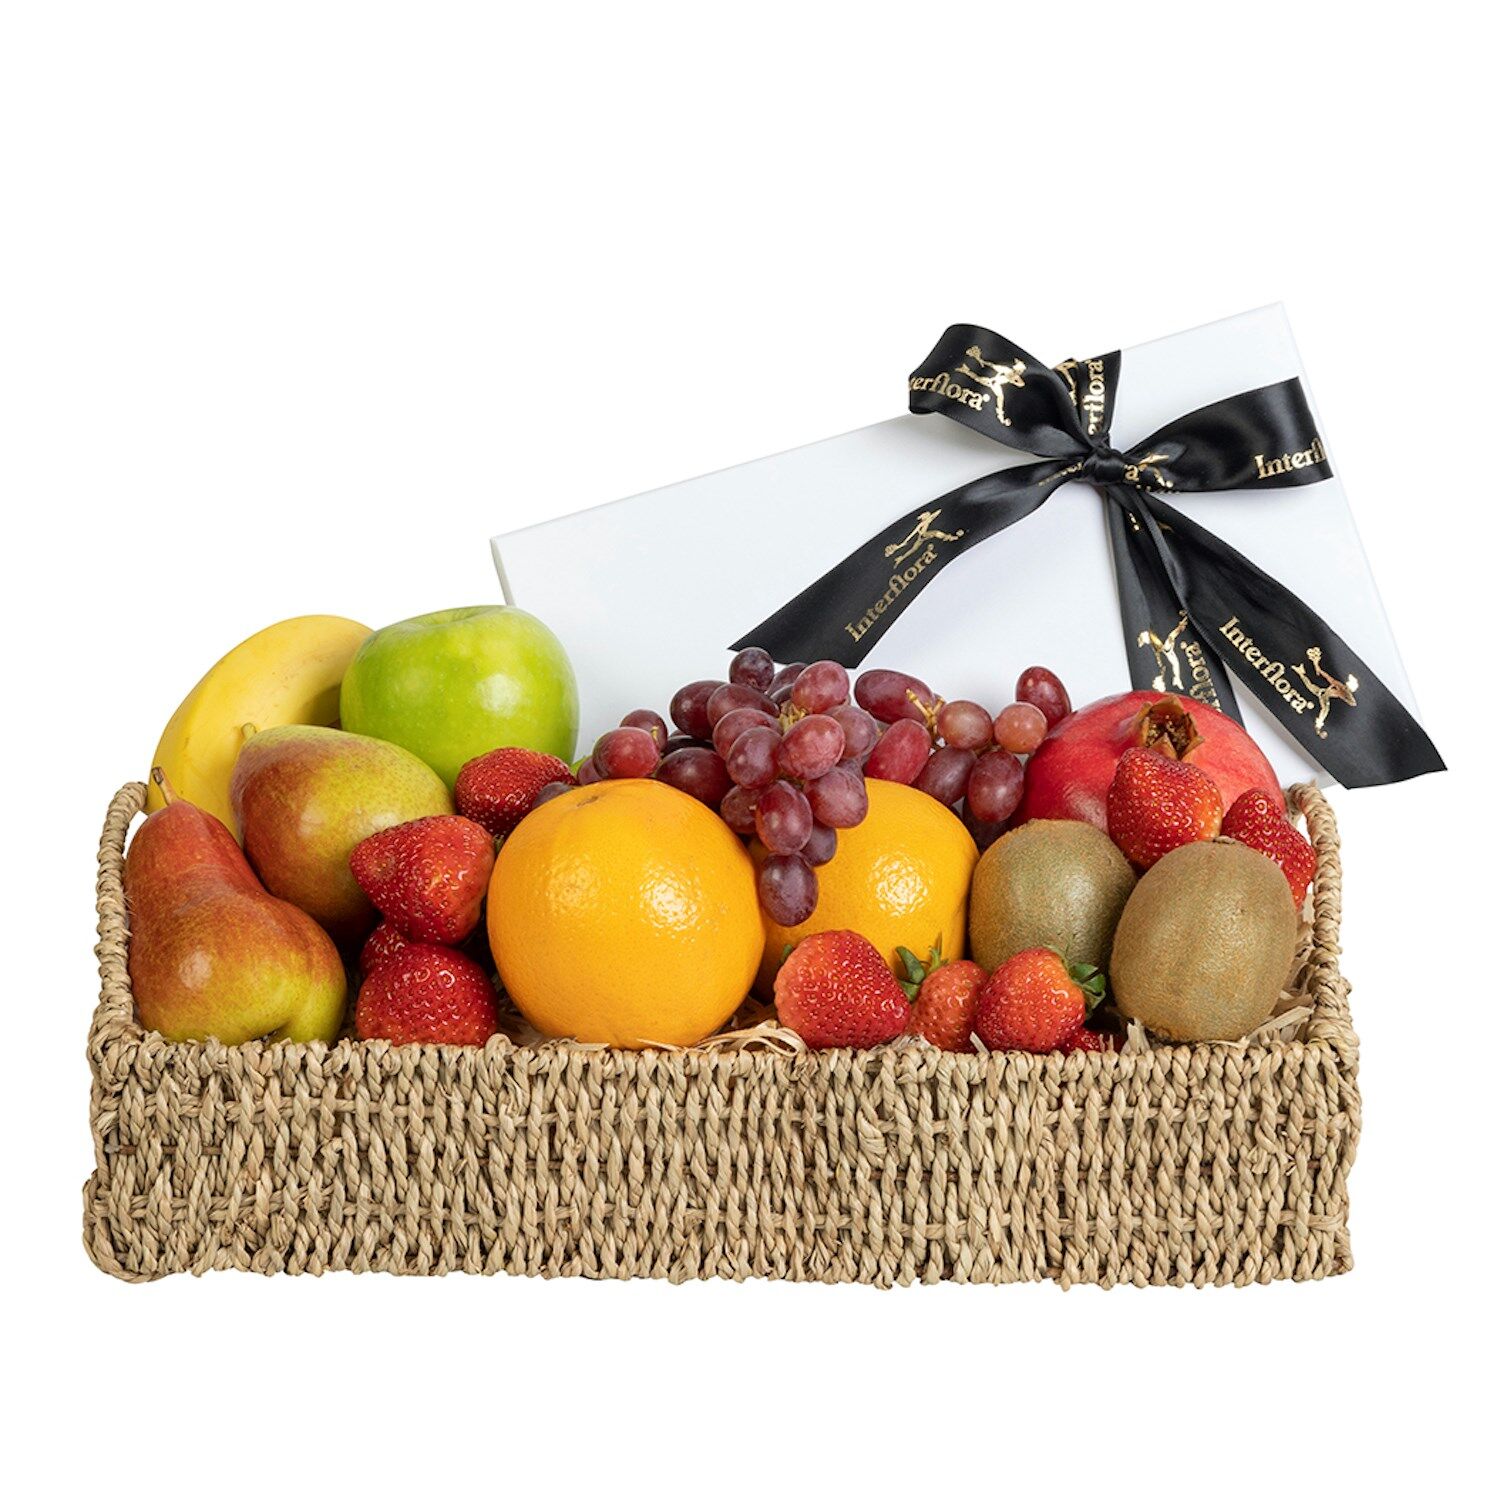 Fruit and Chocolate Gift Basket